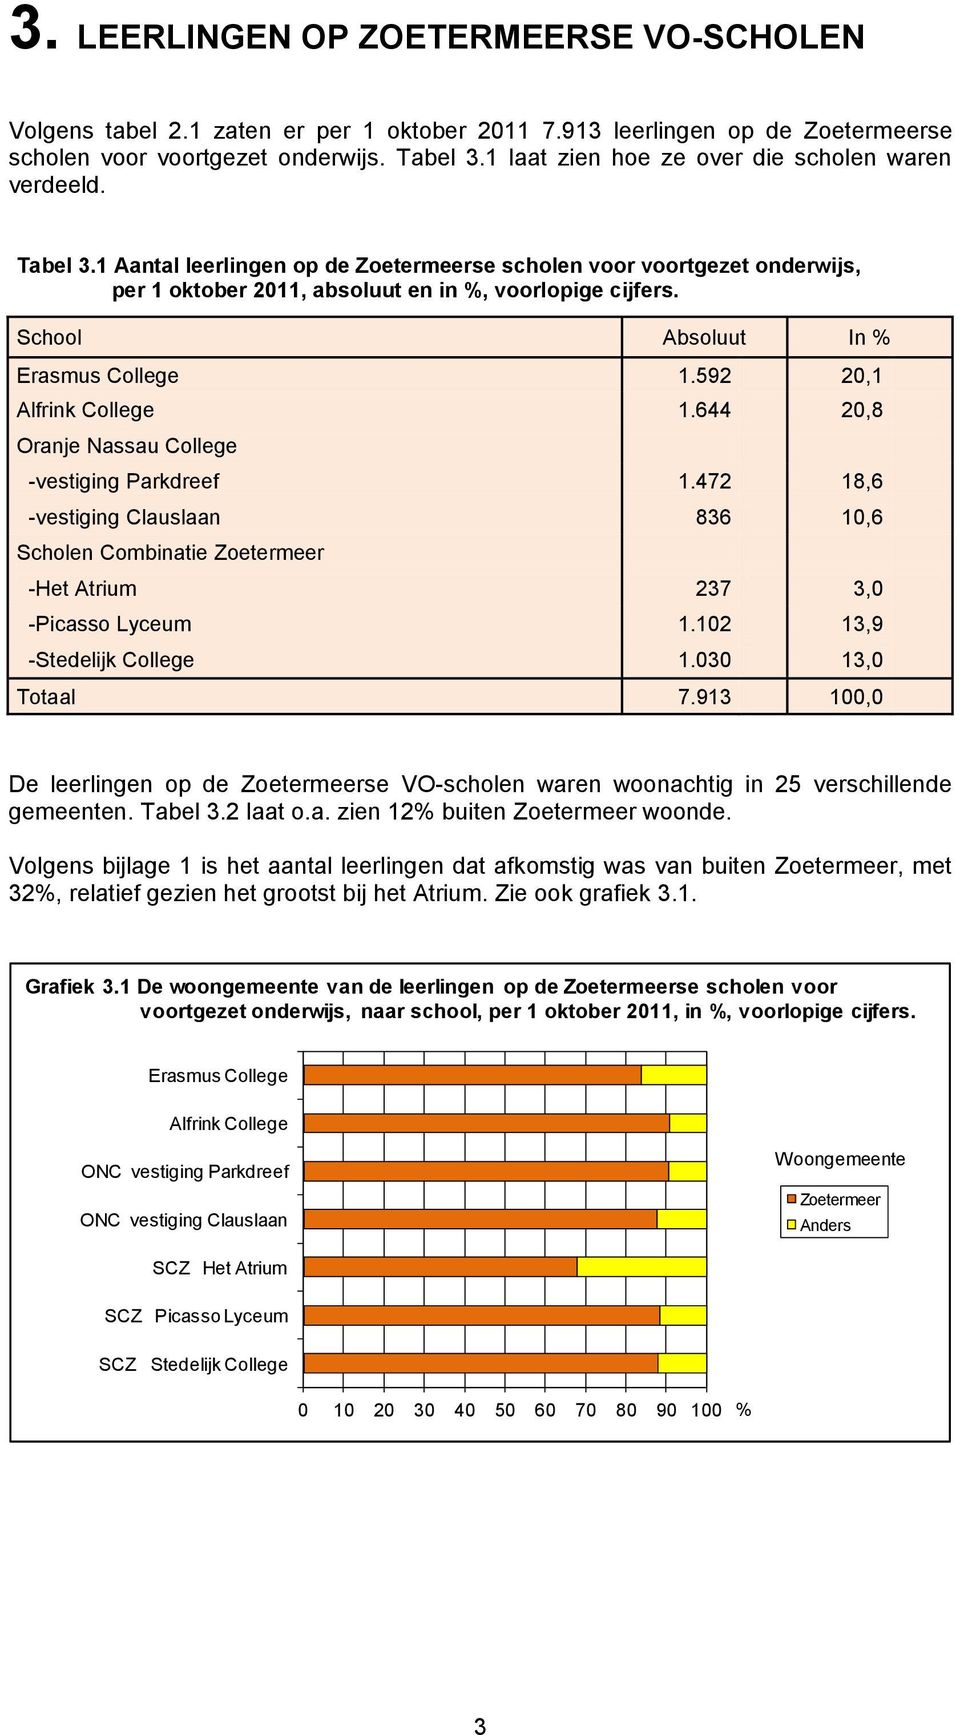 School Absoluut In % Erasmus College 1.592 20,1 Alfrink College 1.644 20,8 Oranje Nassau College -vestiging Parkdreef 1.